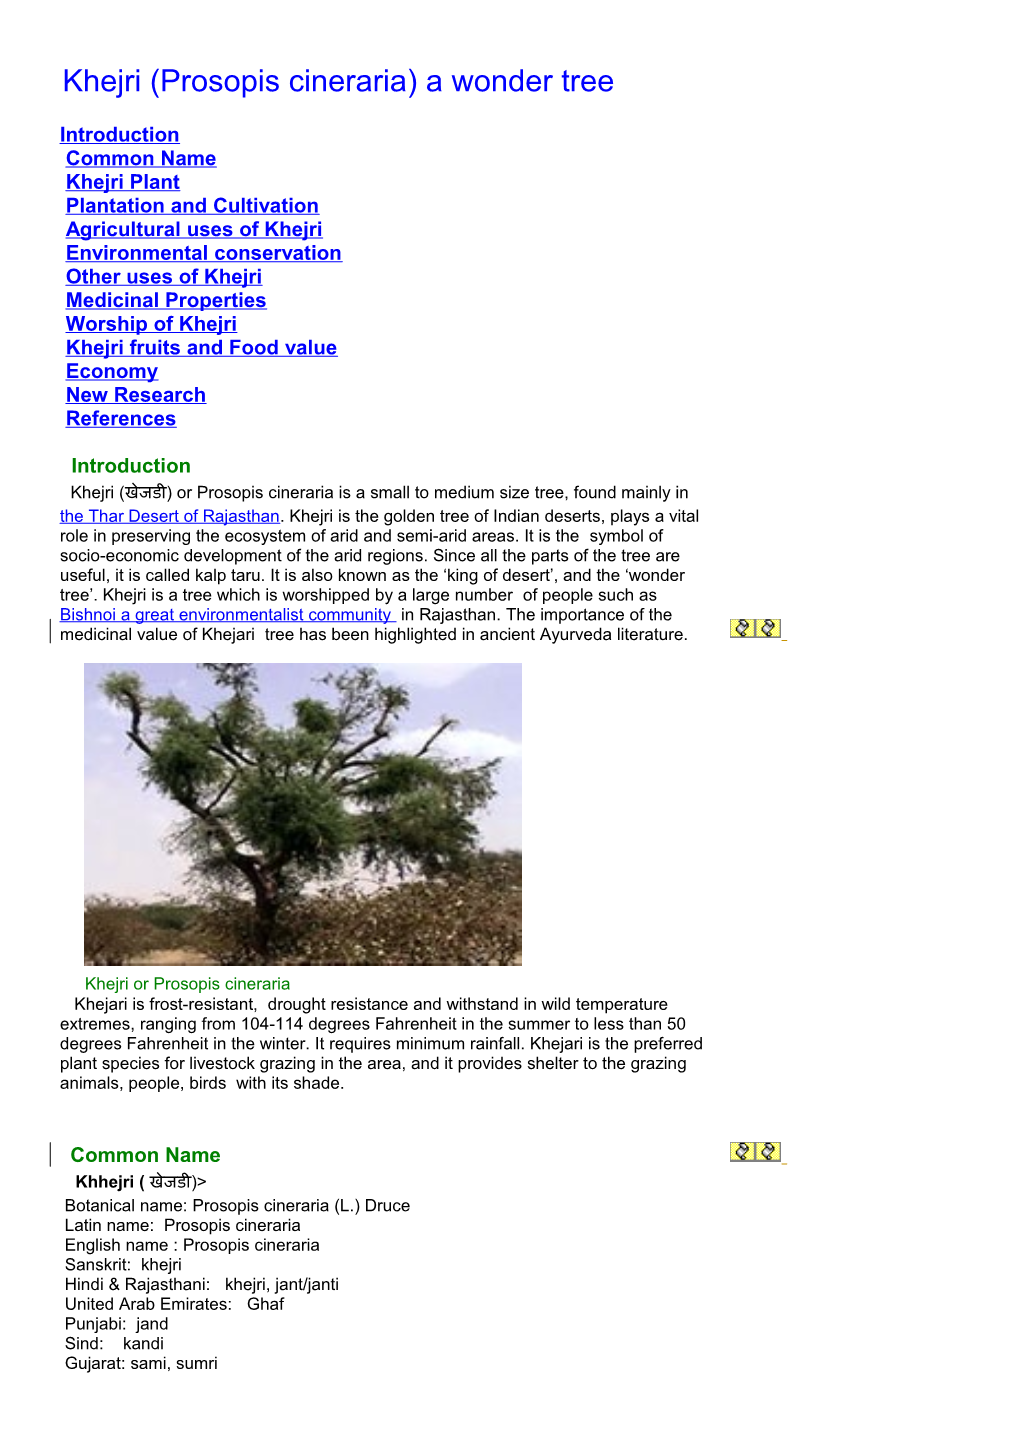 Khejri (Prosopis Cineraria) a Wonder Tree